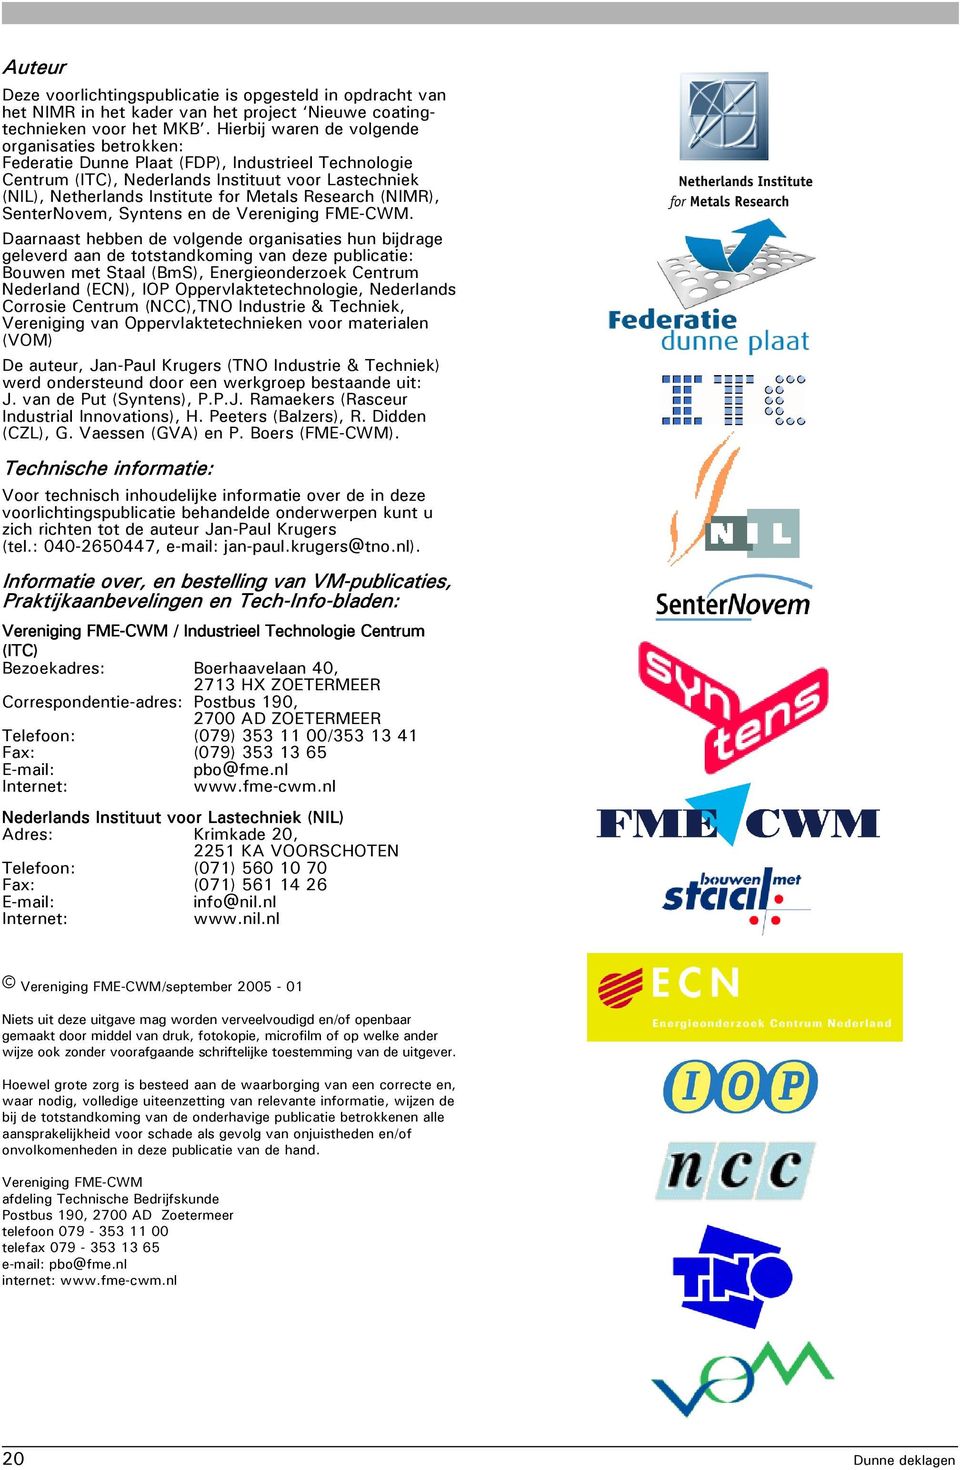 Research (NIMR), SenterNovem, Syntens en de Vereniging FME-CWM.